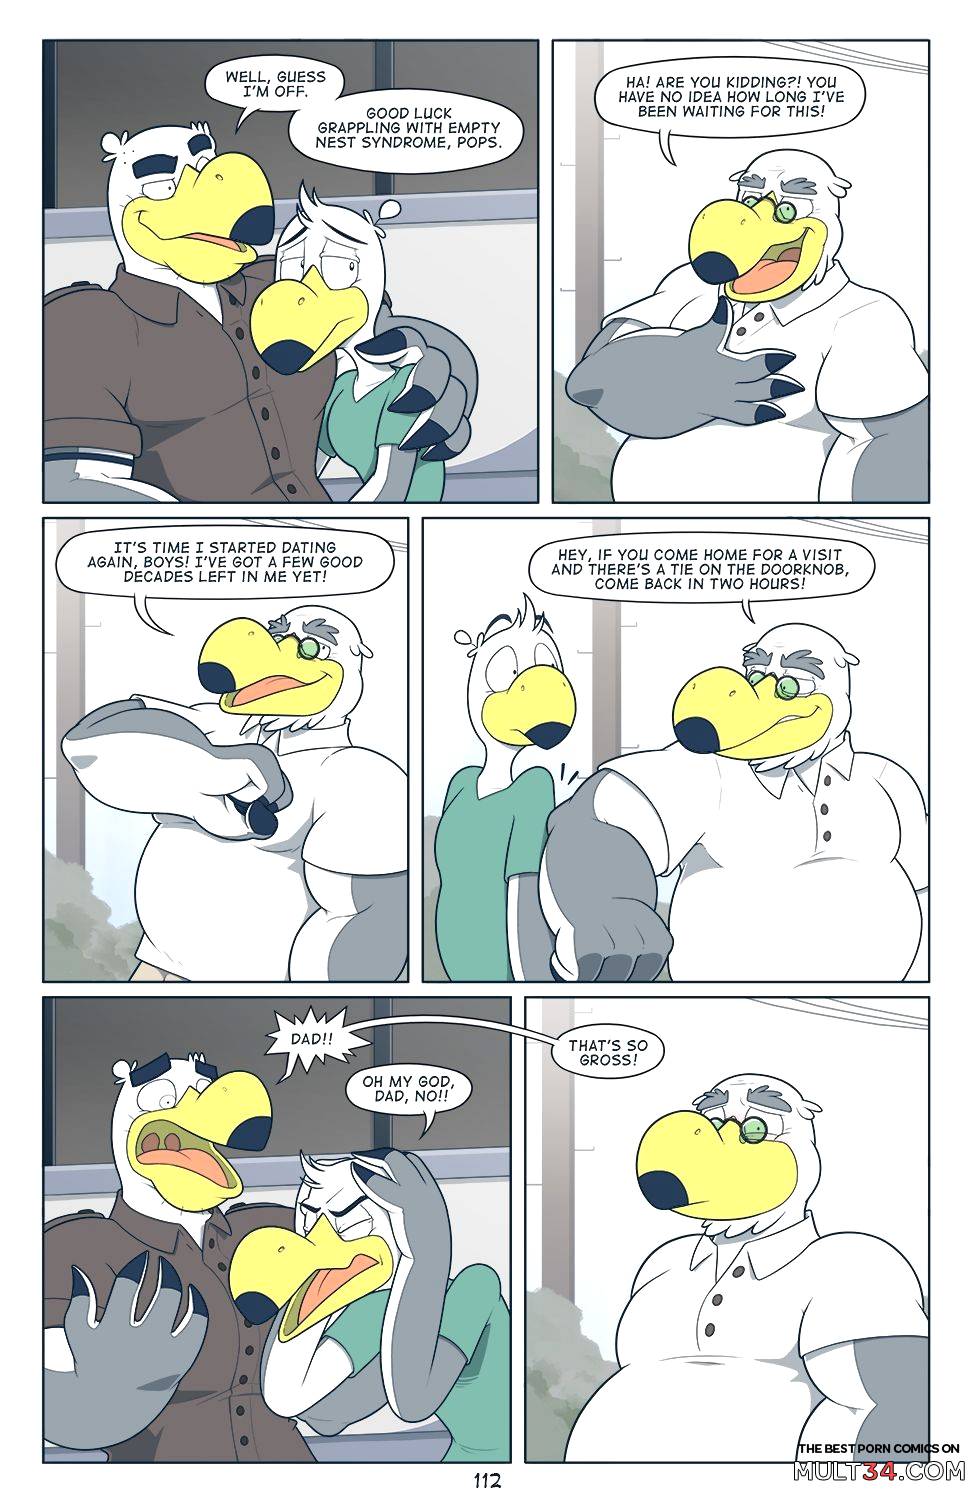 Brogulls page 113